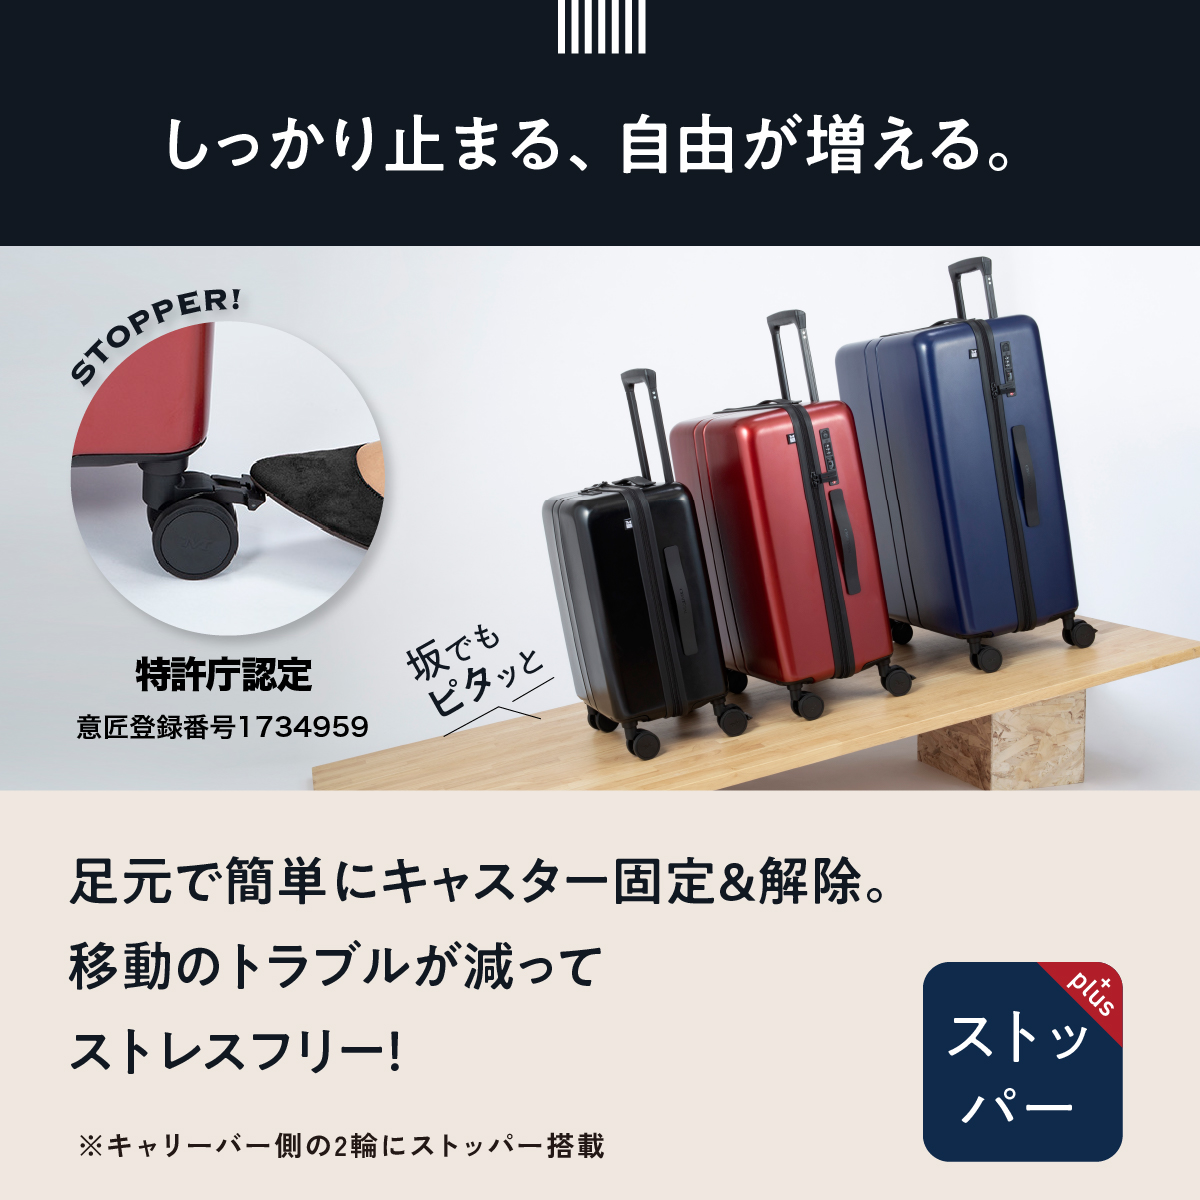 MAIMO スーツケース Lサイズ ストッパー付き 軽量 高機能 高品質 大 